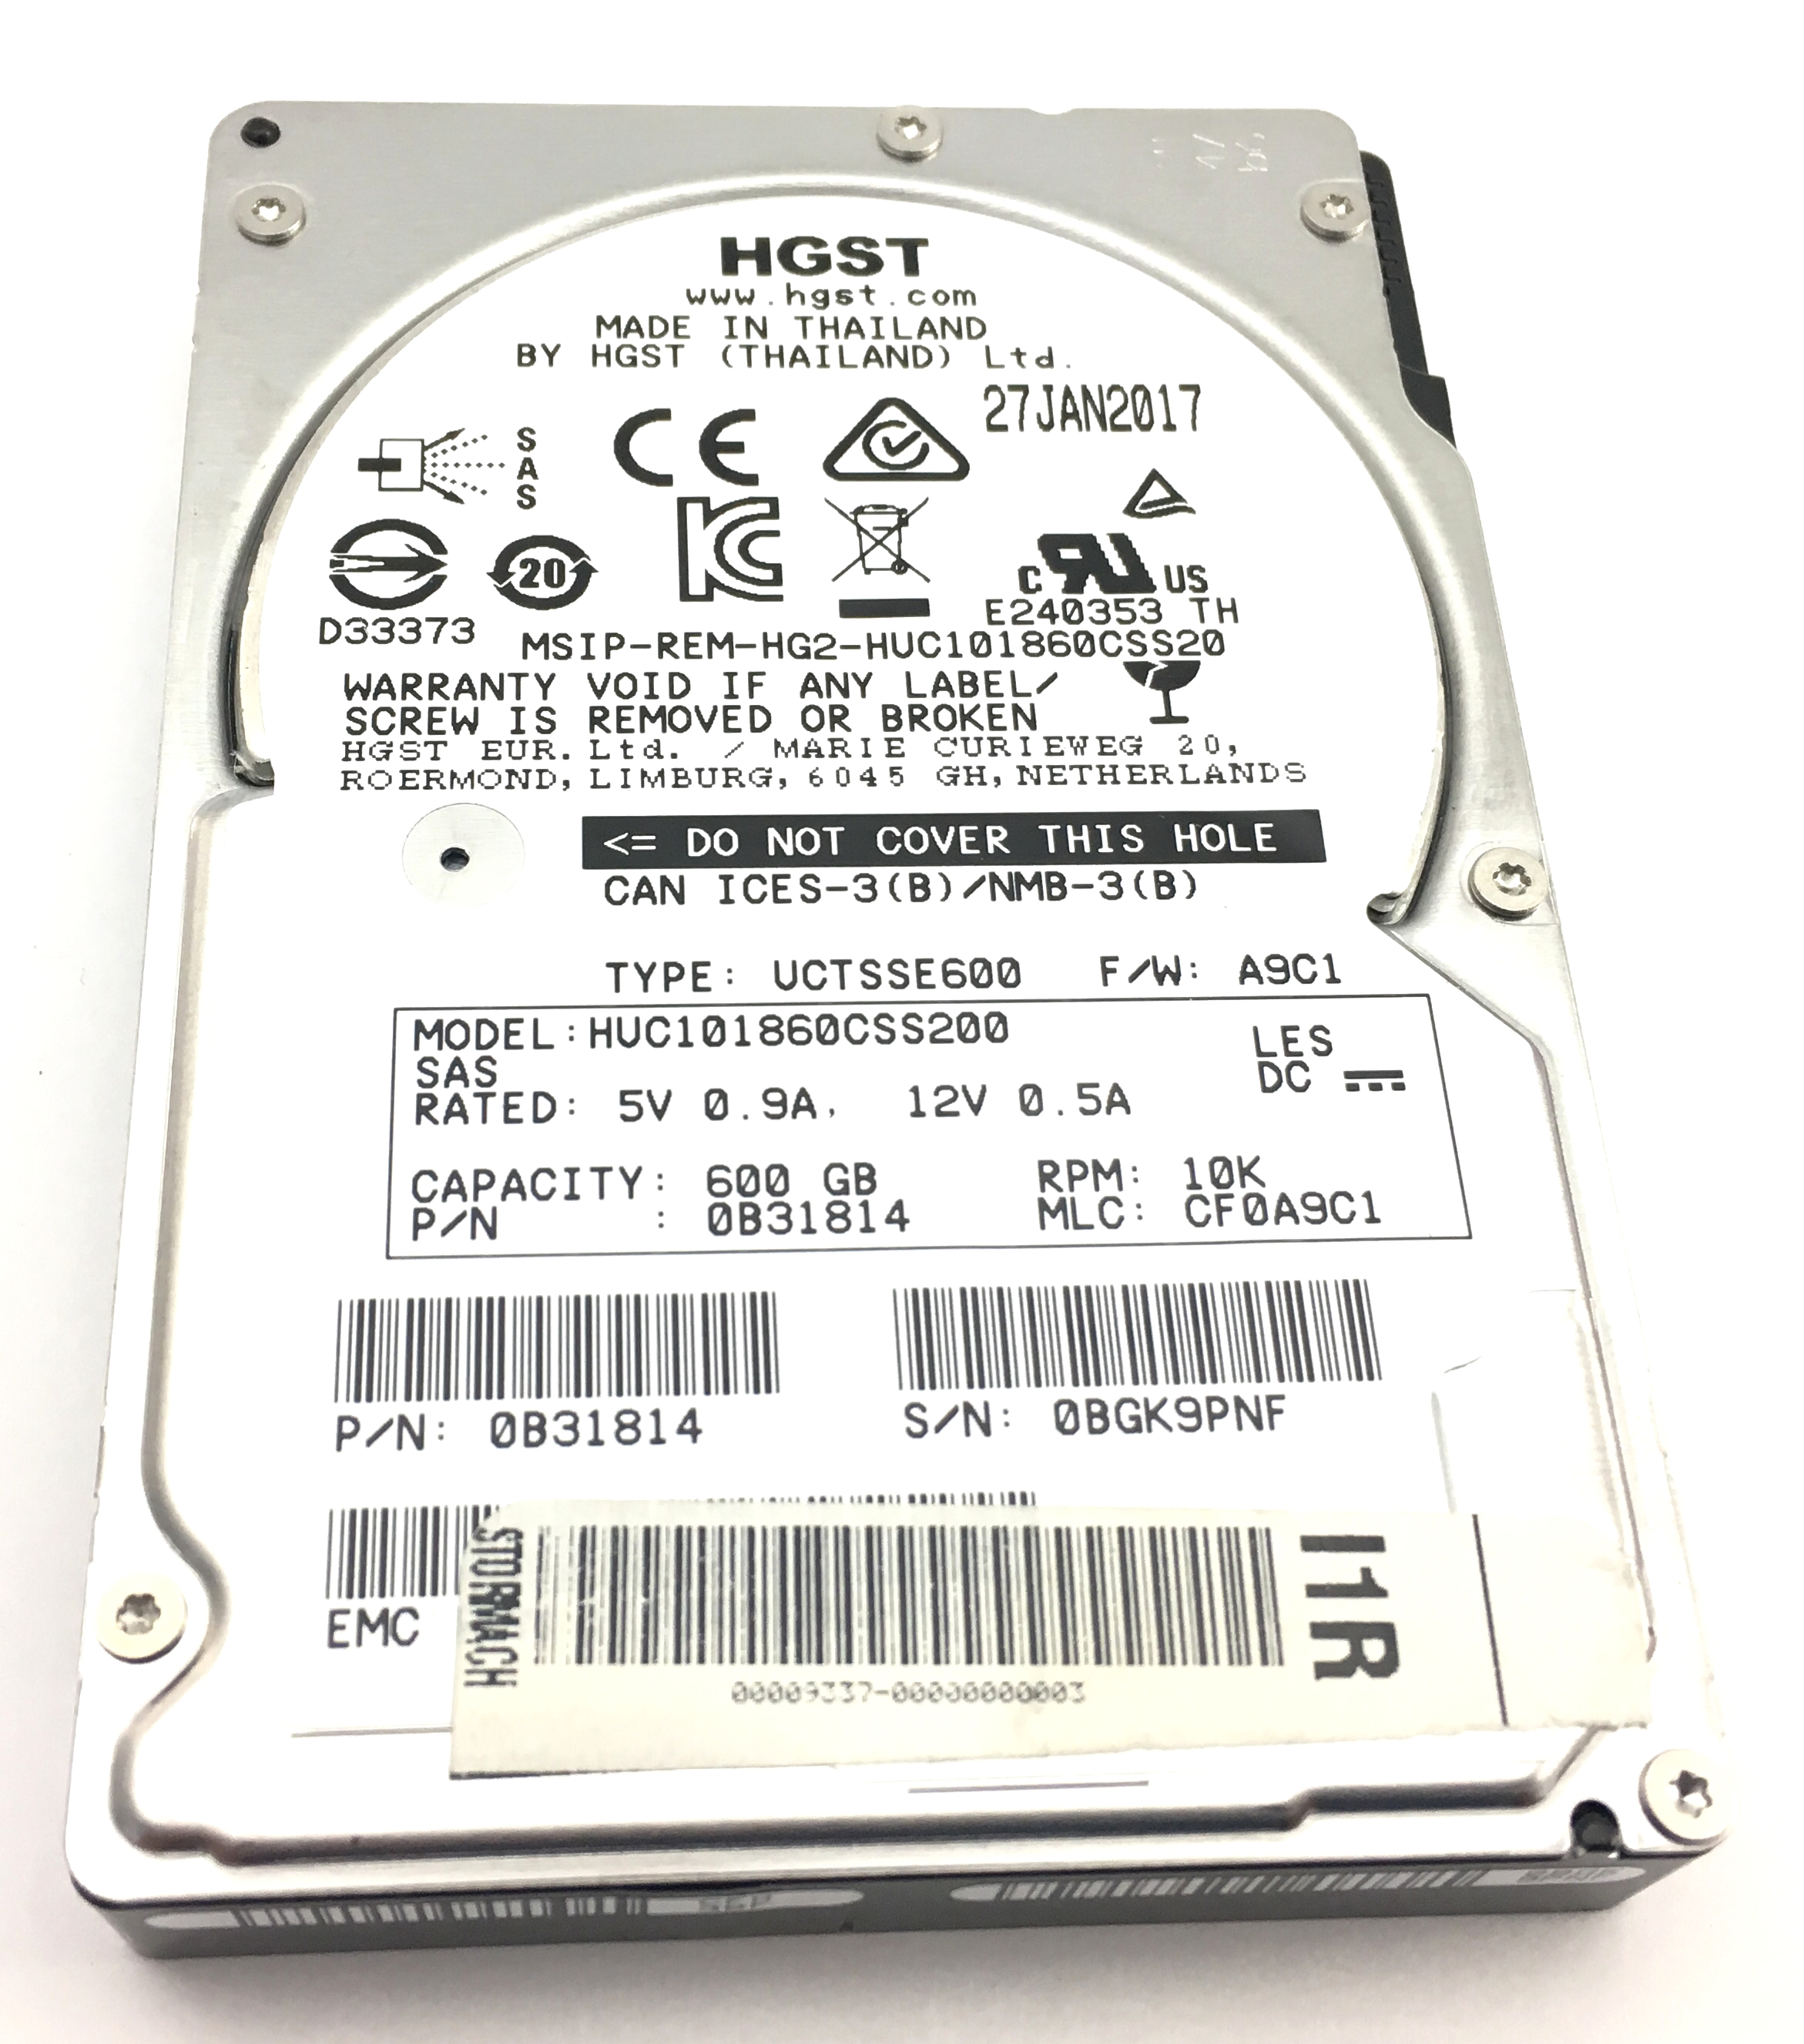 HGST 600GB 10K 12GBPS SAS 2.5'' Hard Drive (HUC101860CSS200)